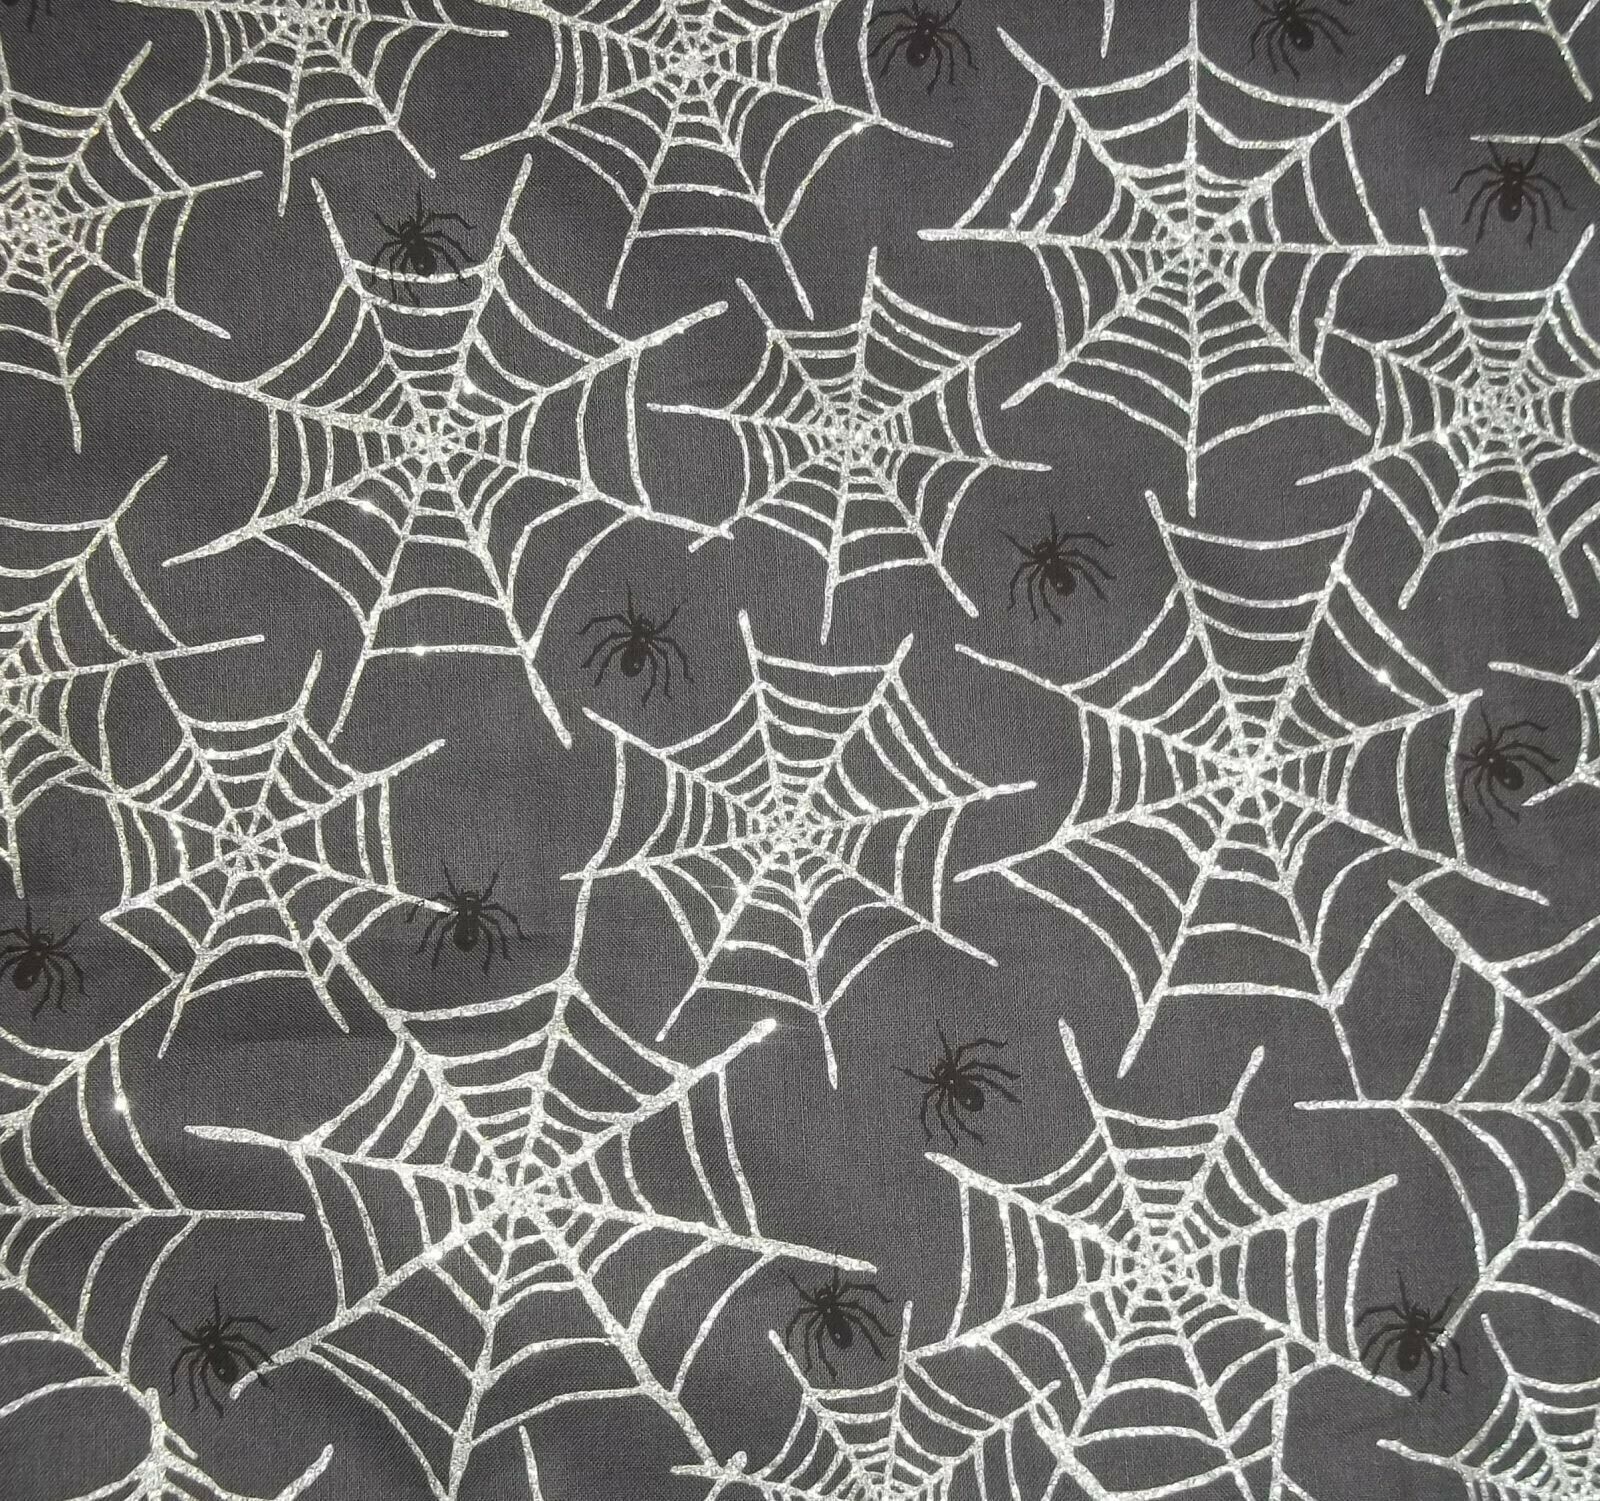 Sparkly Cob Webs 2 Yards MBT Fabric Black Spiders Dark Gray Background - $19.79